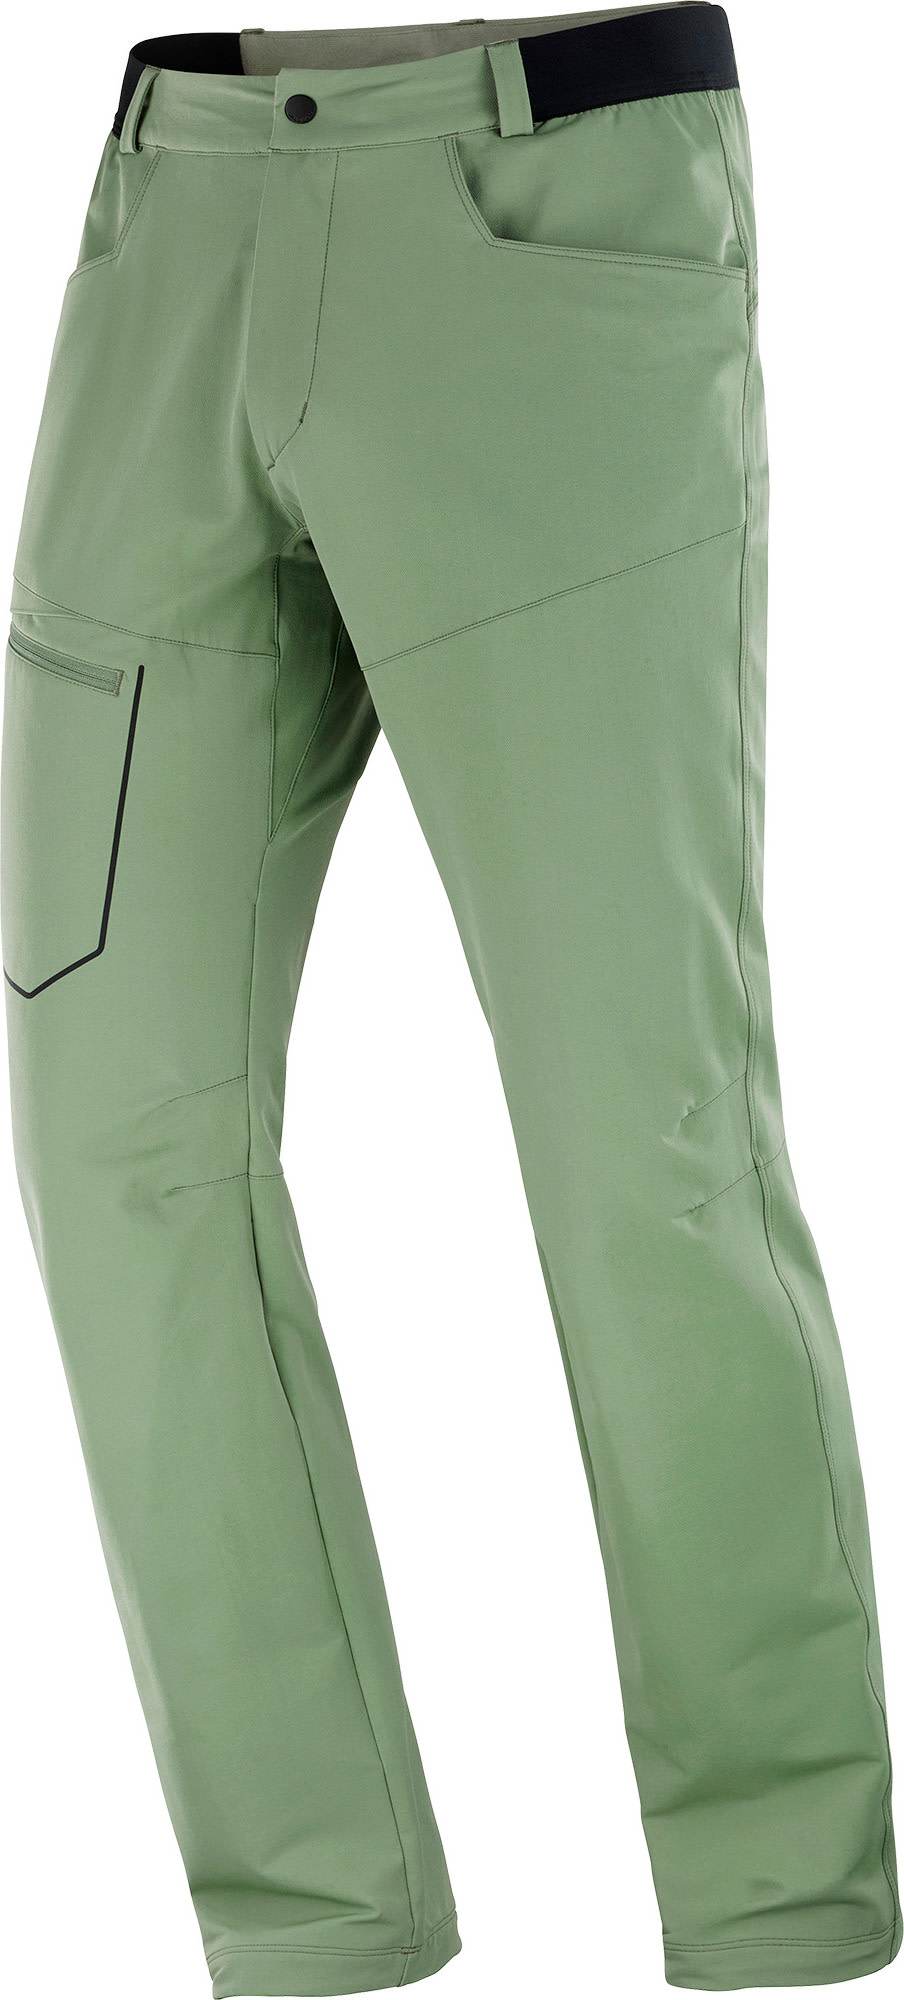 Salomon Men's Wayfarer Warm Pants Green 52, Laurel Wreath